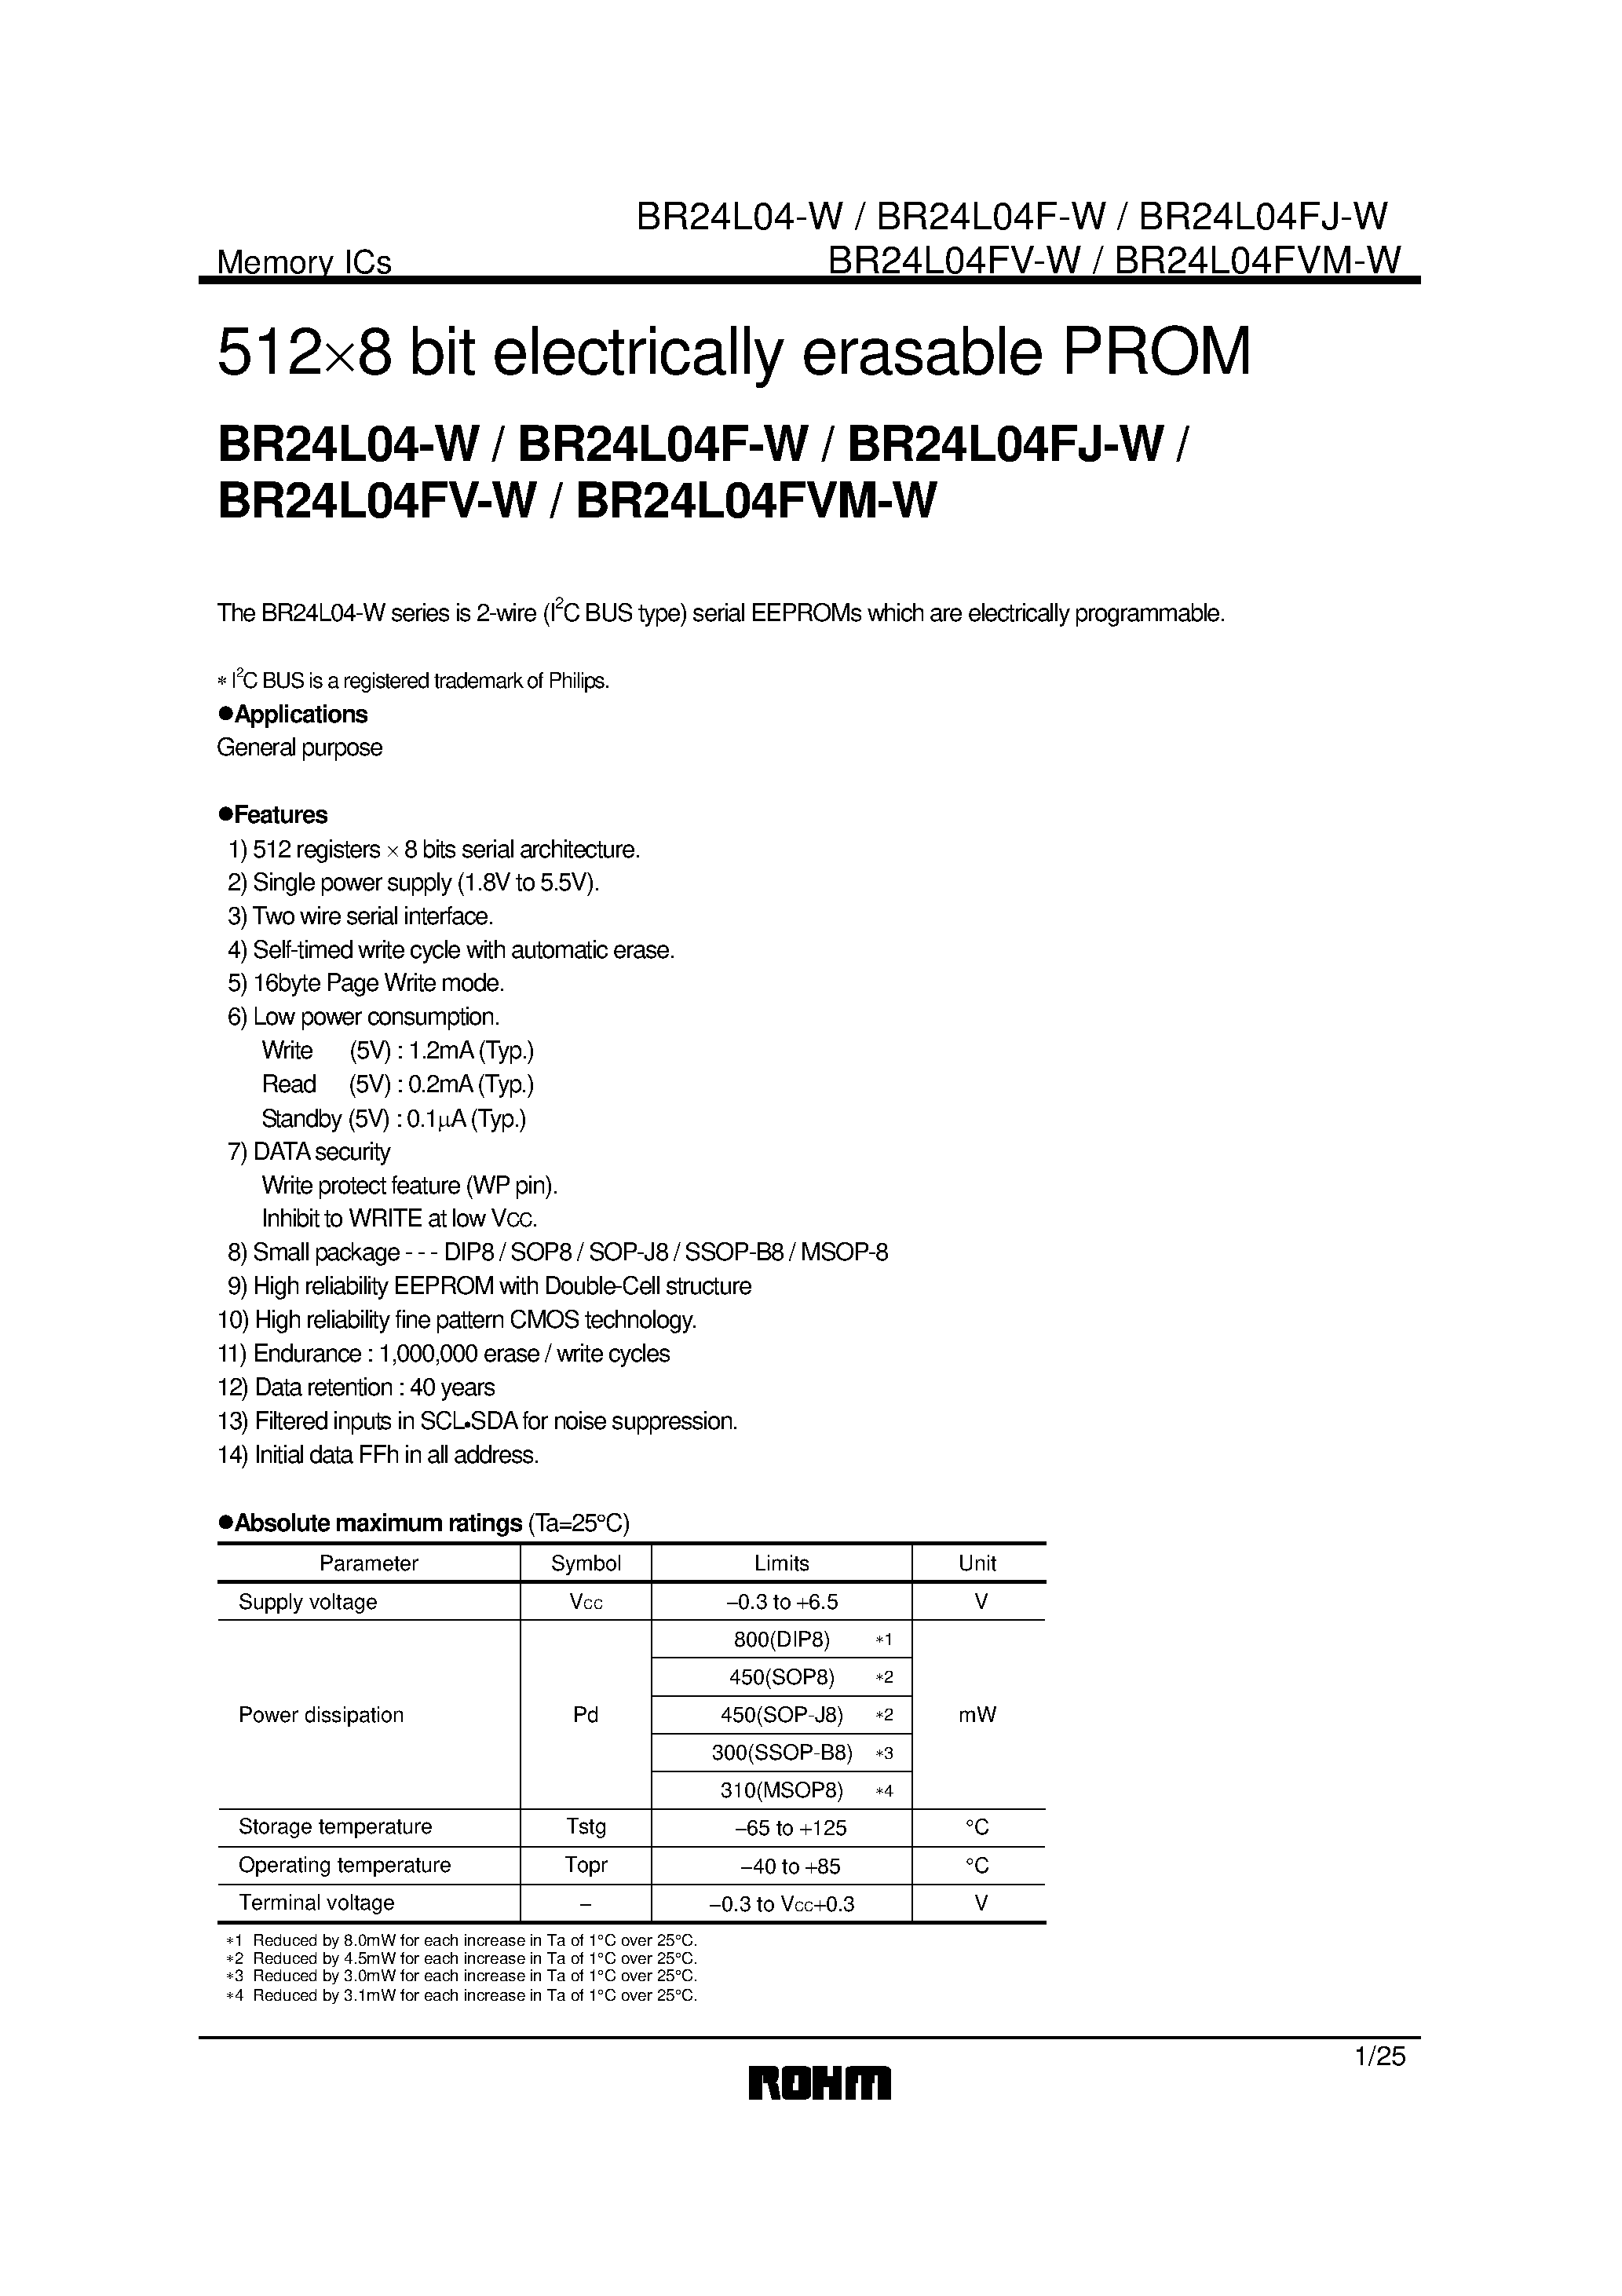 Datasheet BR24L04FJ-W - 5128 bit electrically erasable PROM page 1